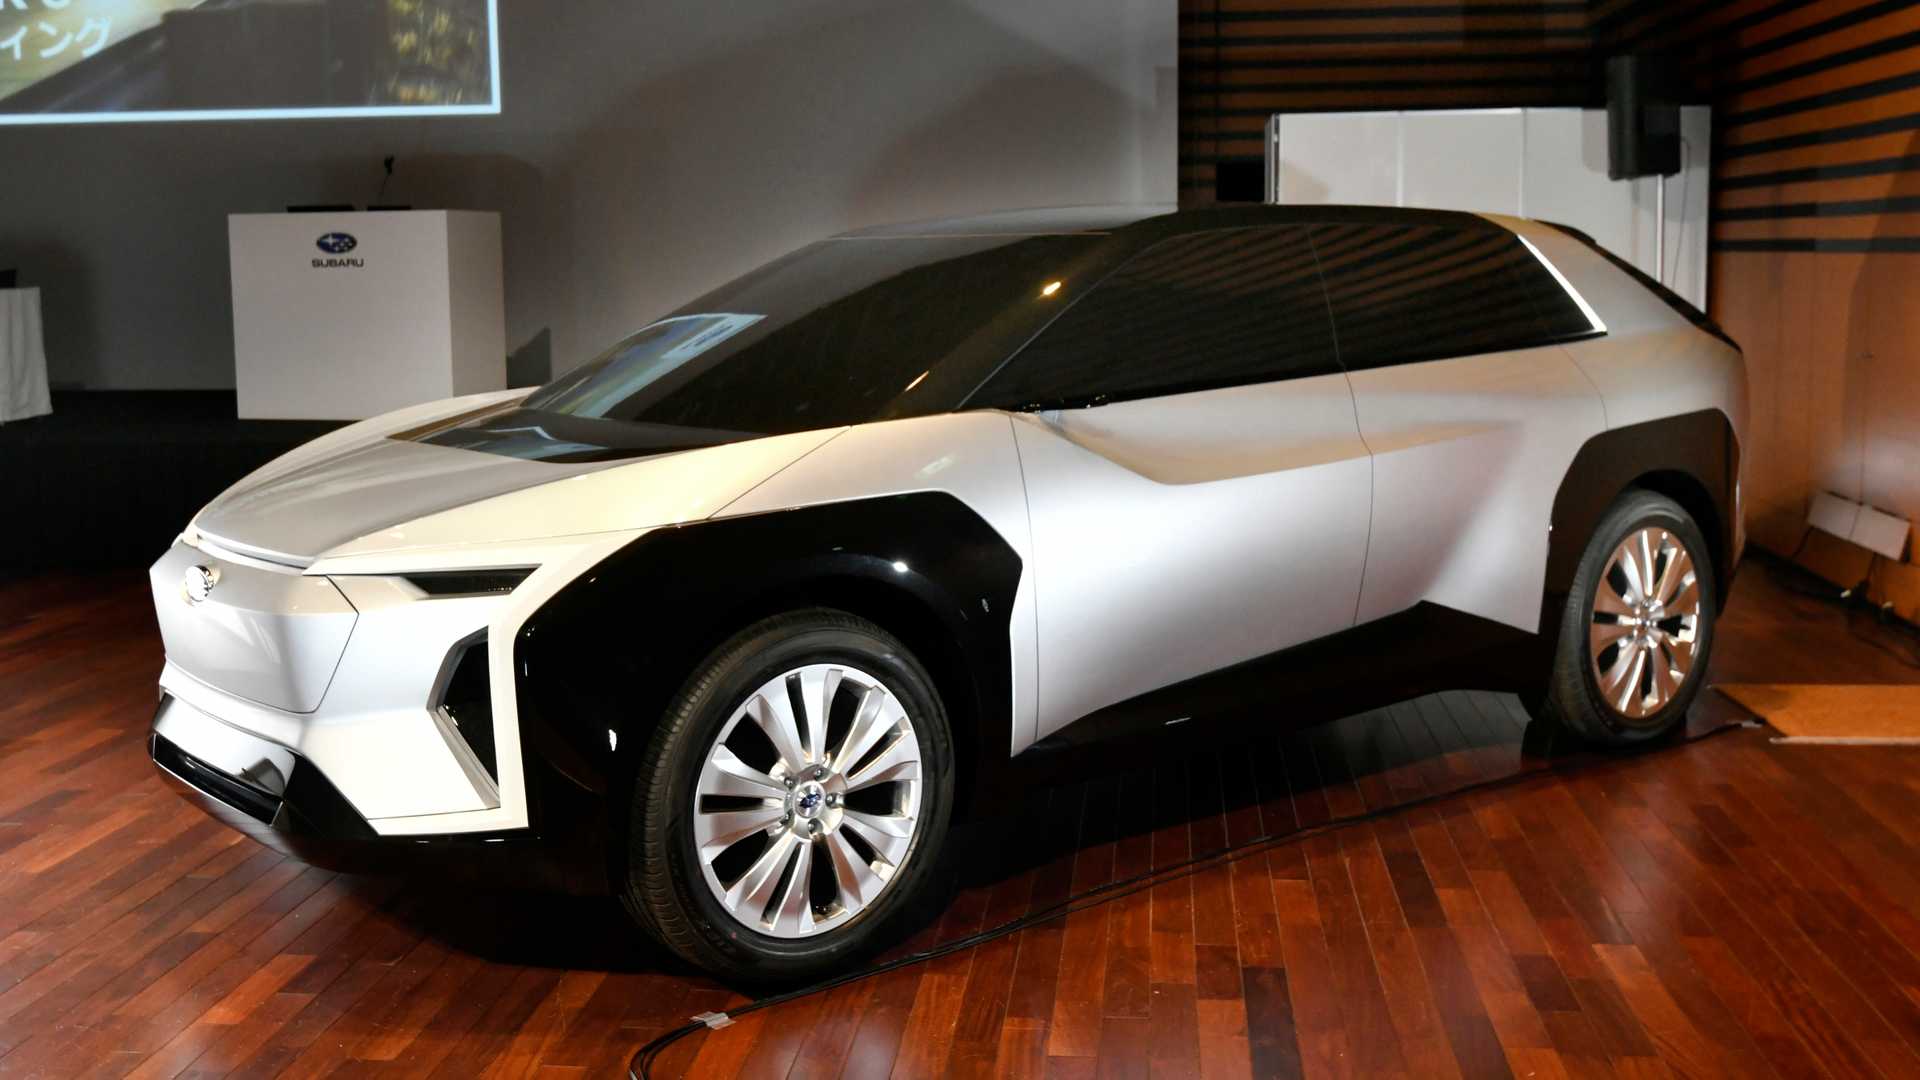 Subaru to launch its first electric car